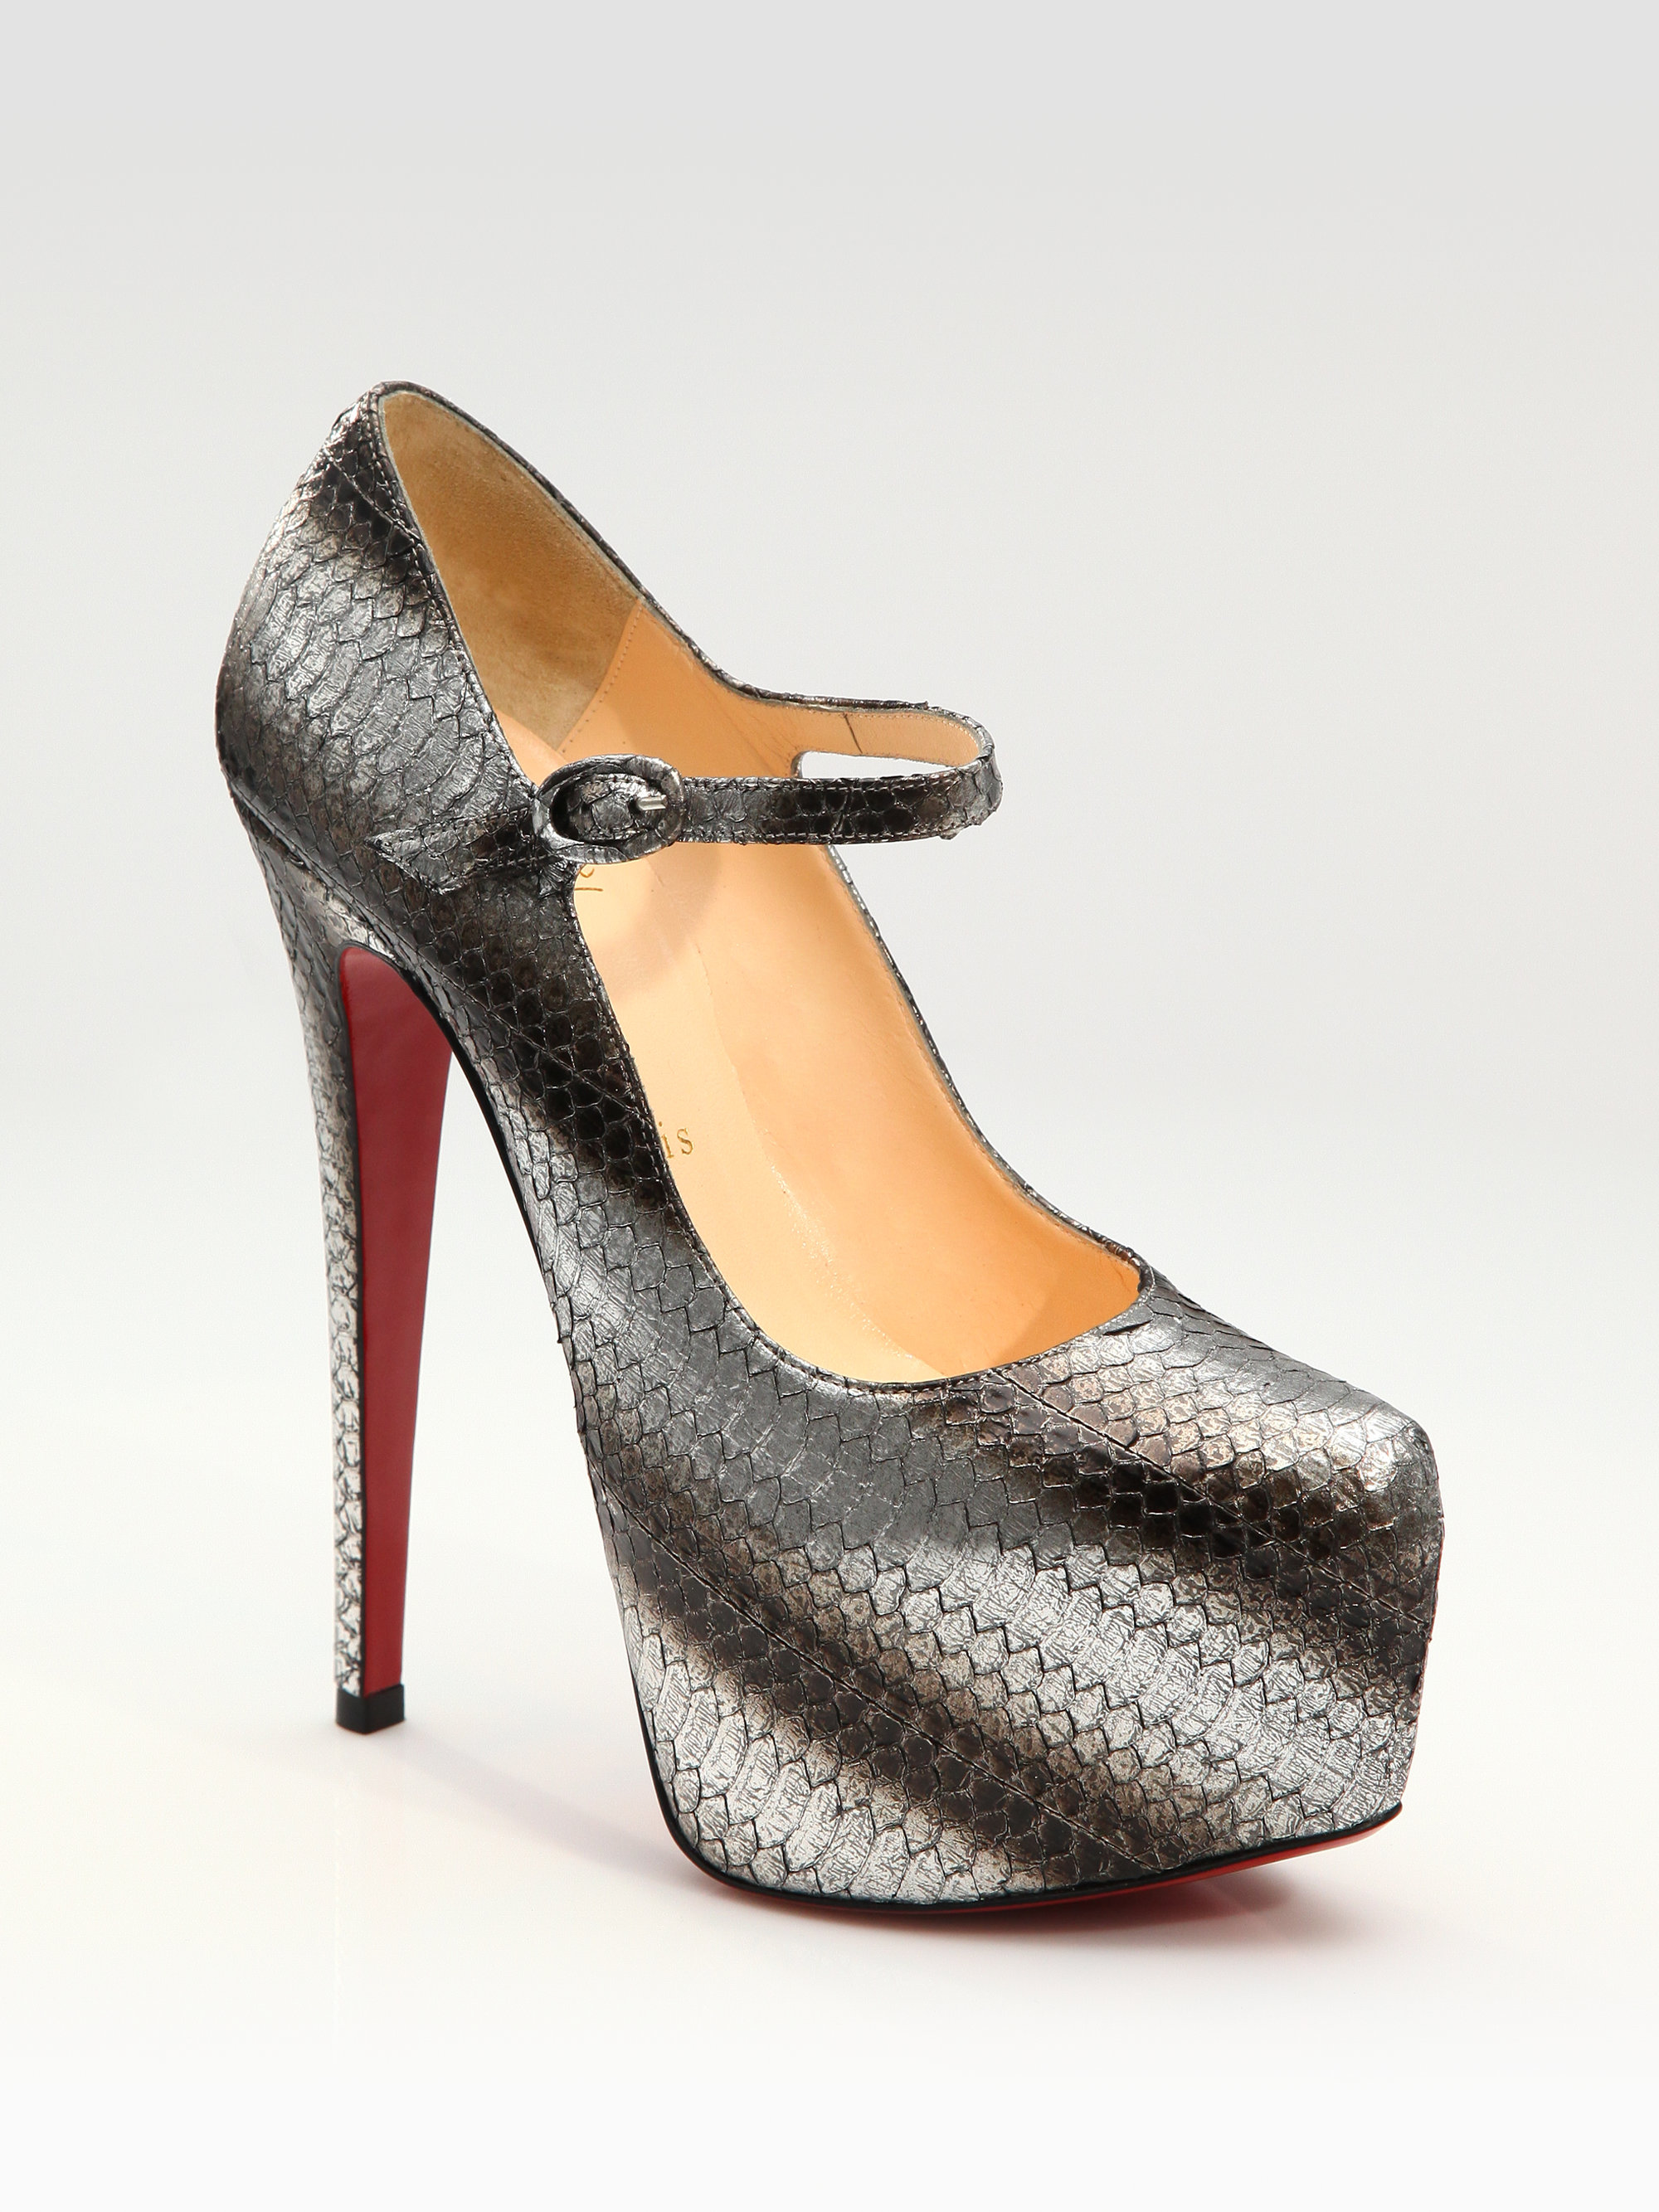 men's louis vuitton shoes - christian louboutin peep-toe pumps Silver metallic snakeskin | The ...